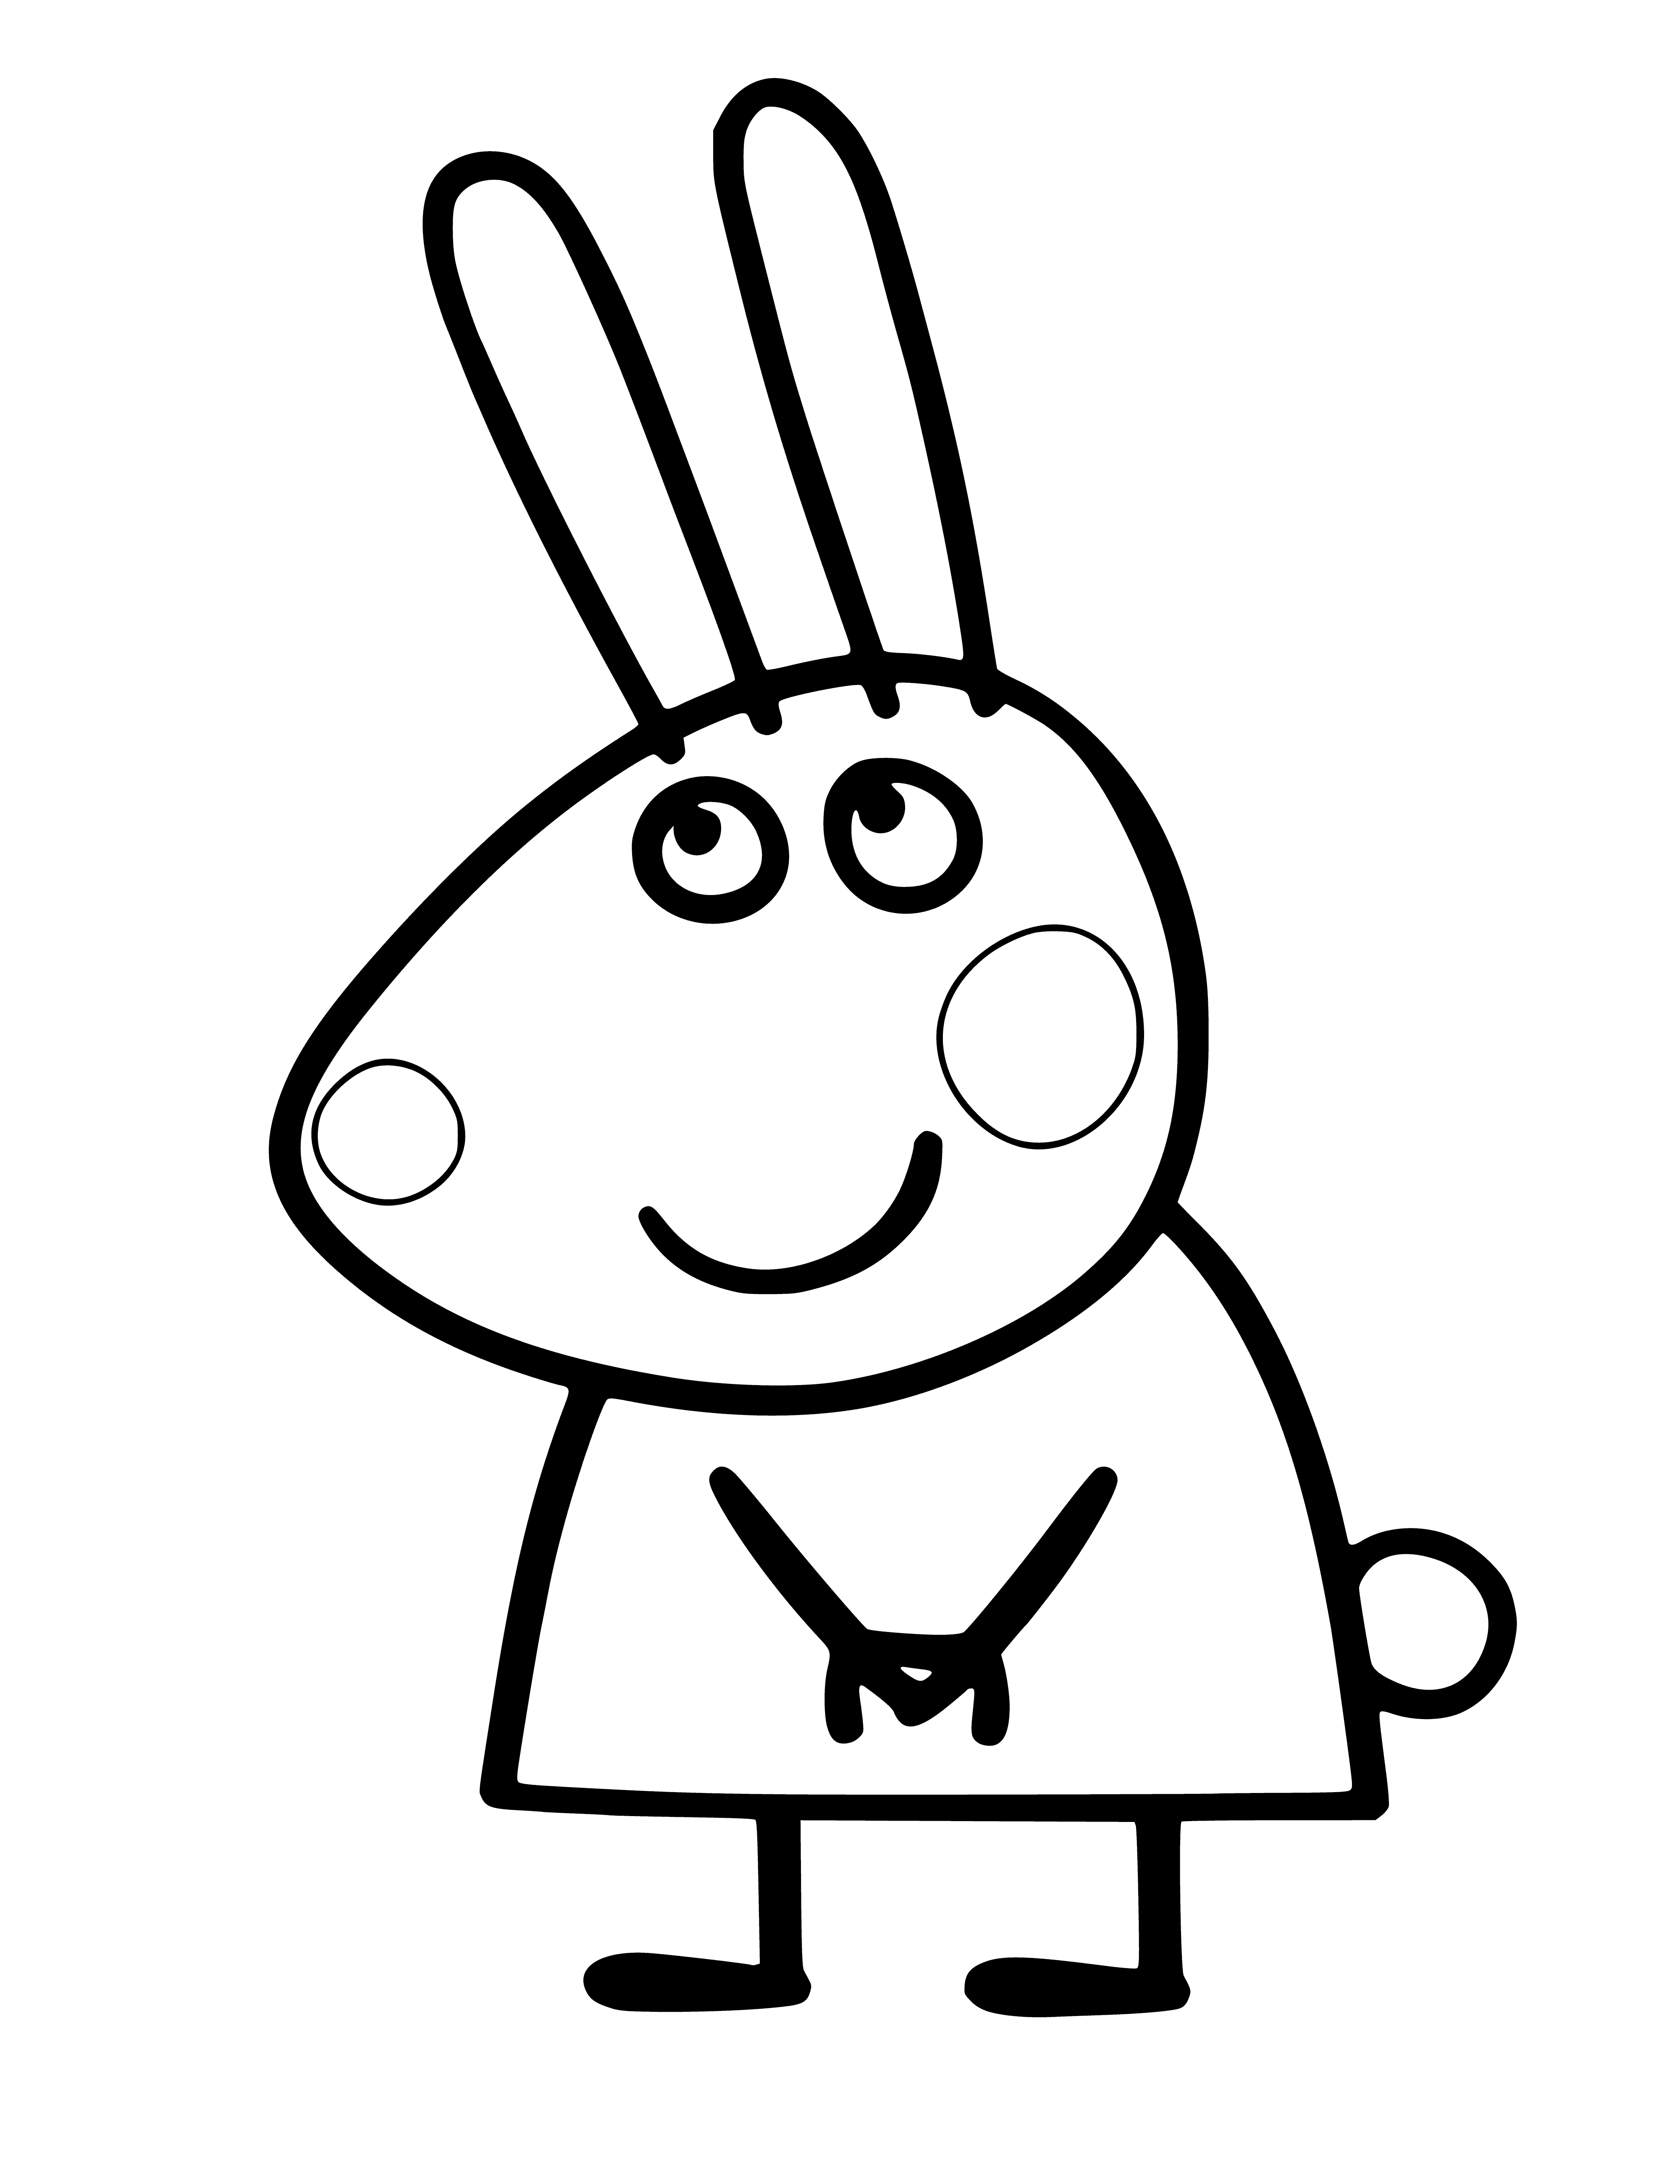 Rabbit Rebecca coloring page